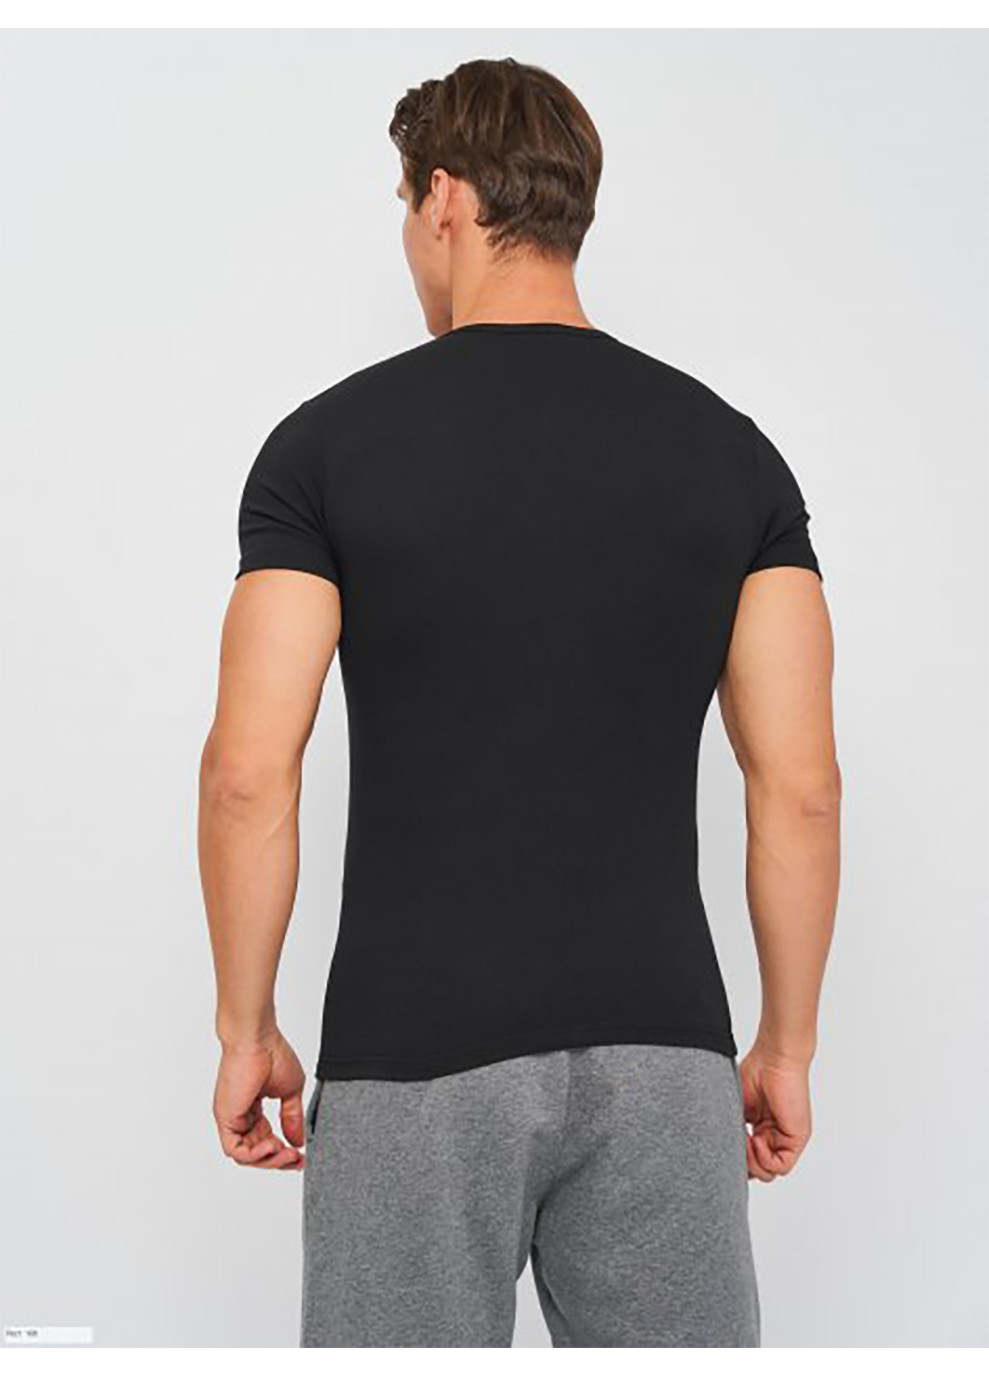 Черная футболка t-shirt mezza manica girocollo черный муж xl k1306 nero xl Kappa